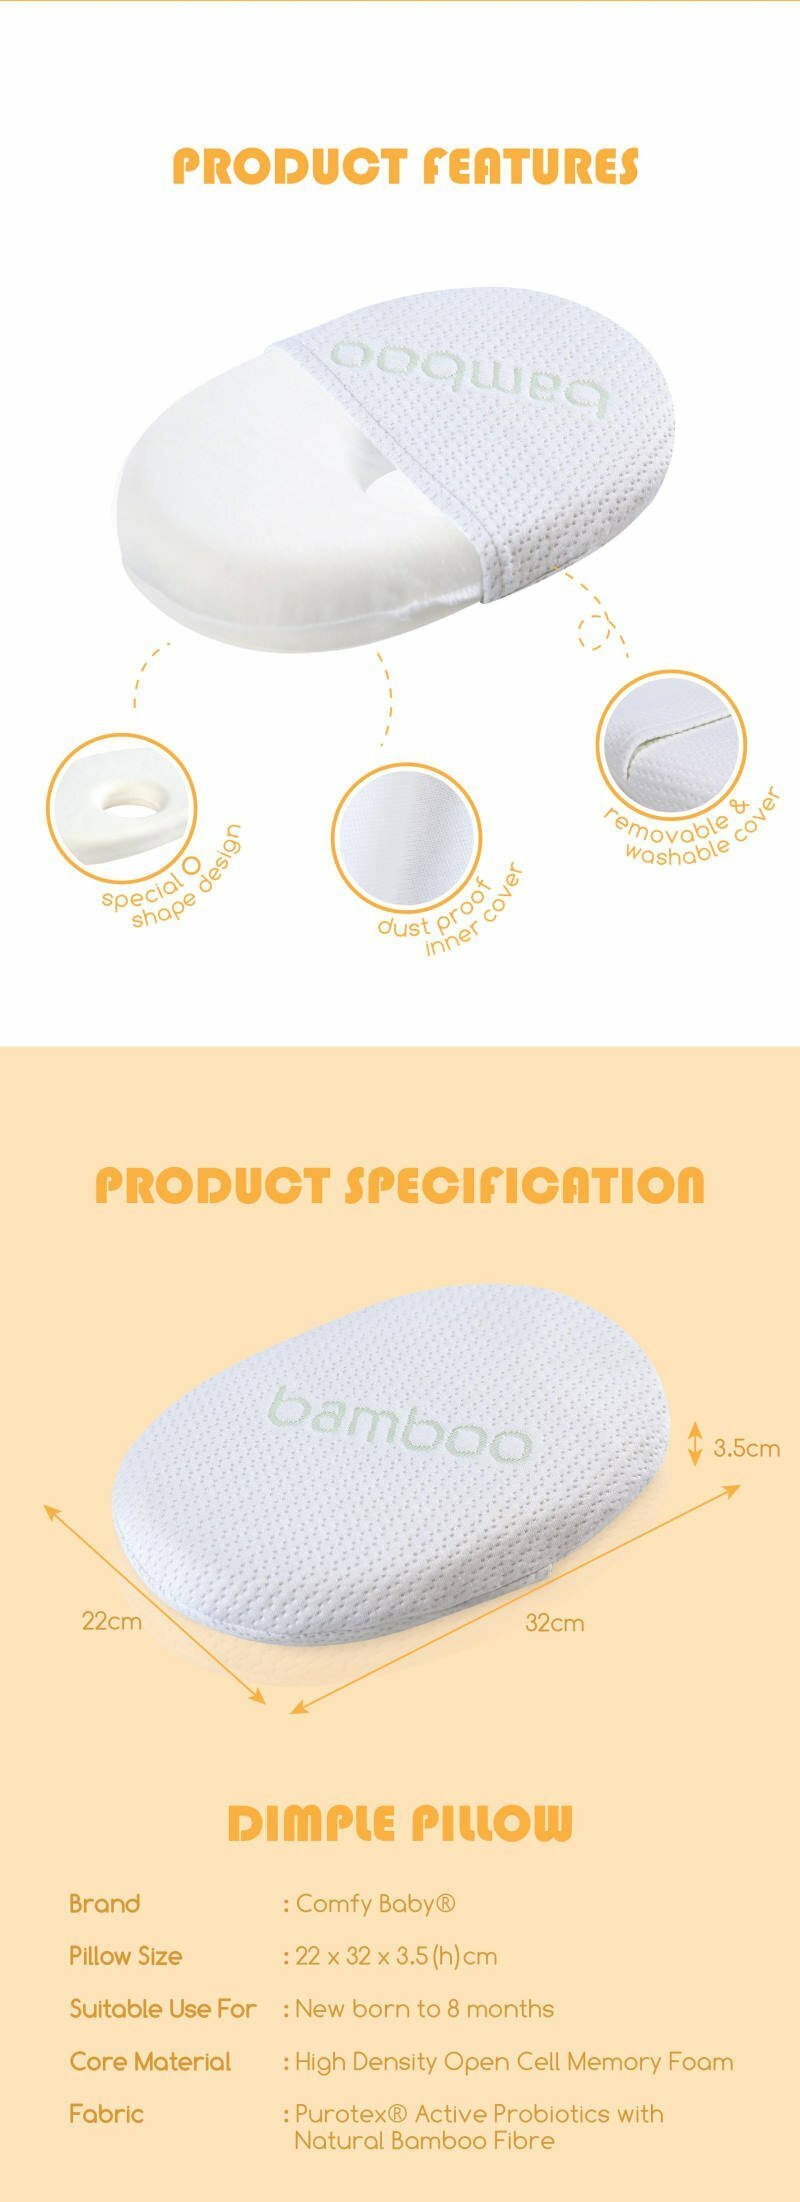 Comfy Baby Purotex Dimple Pillow Product Descriptions